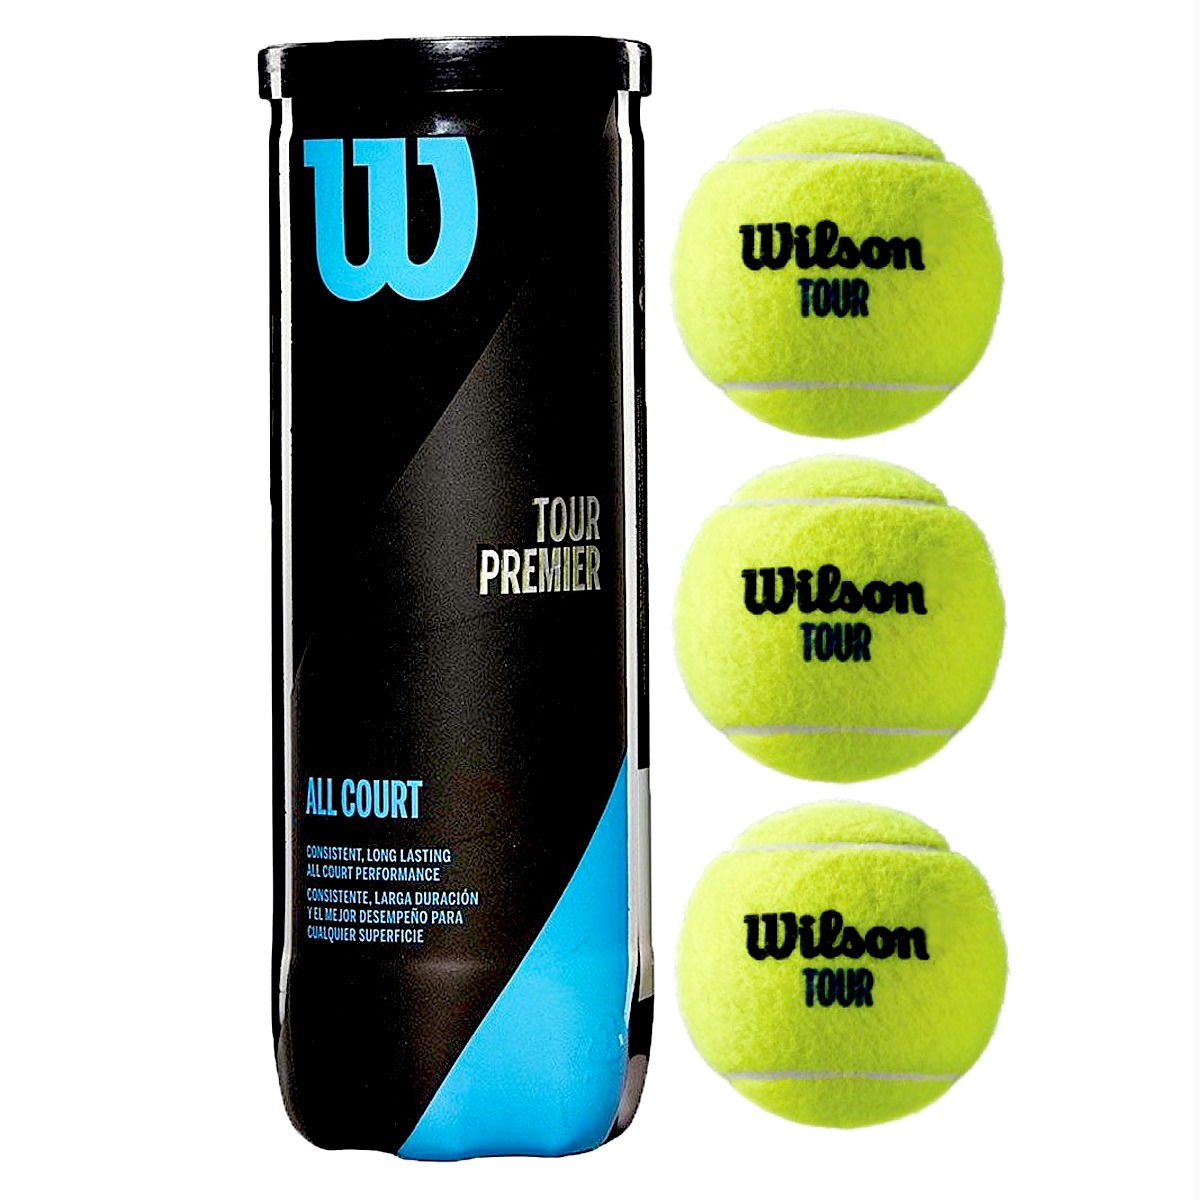 wilson tour premier. All court Tennis balls